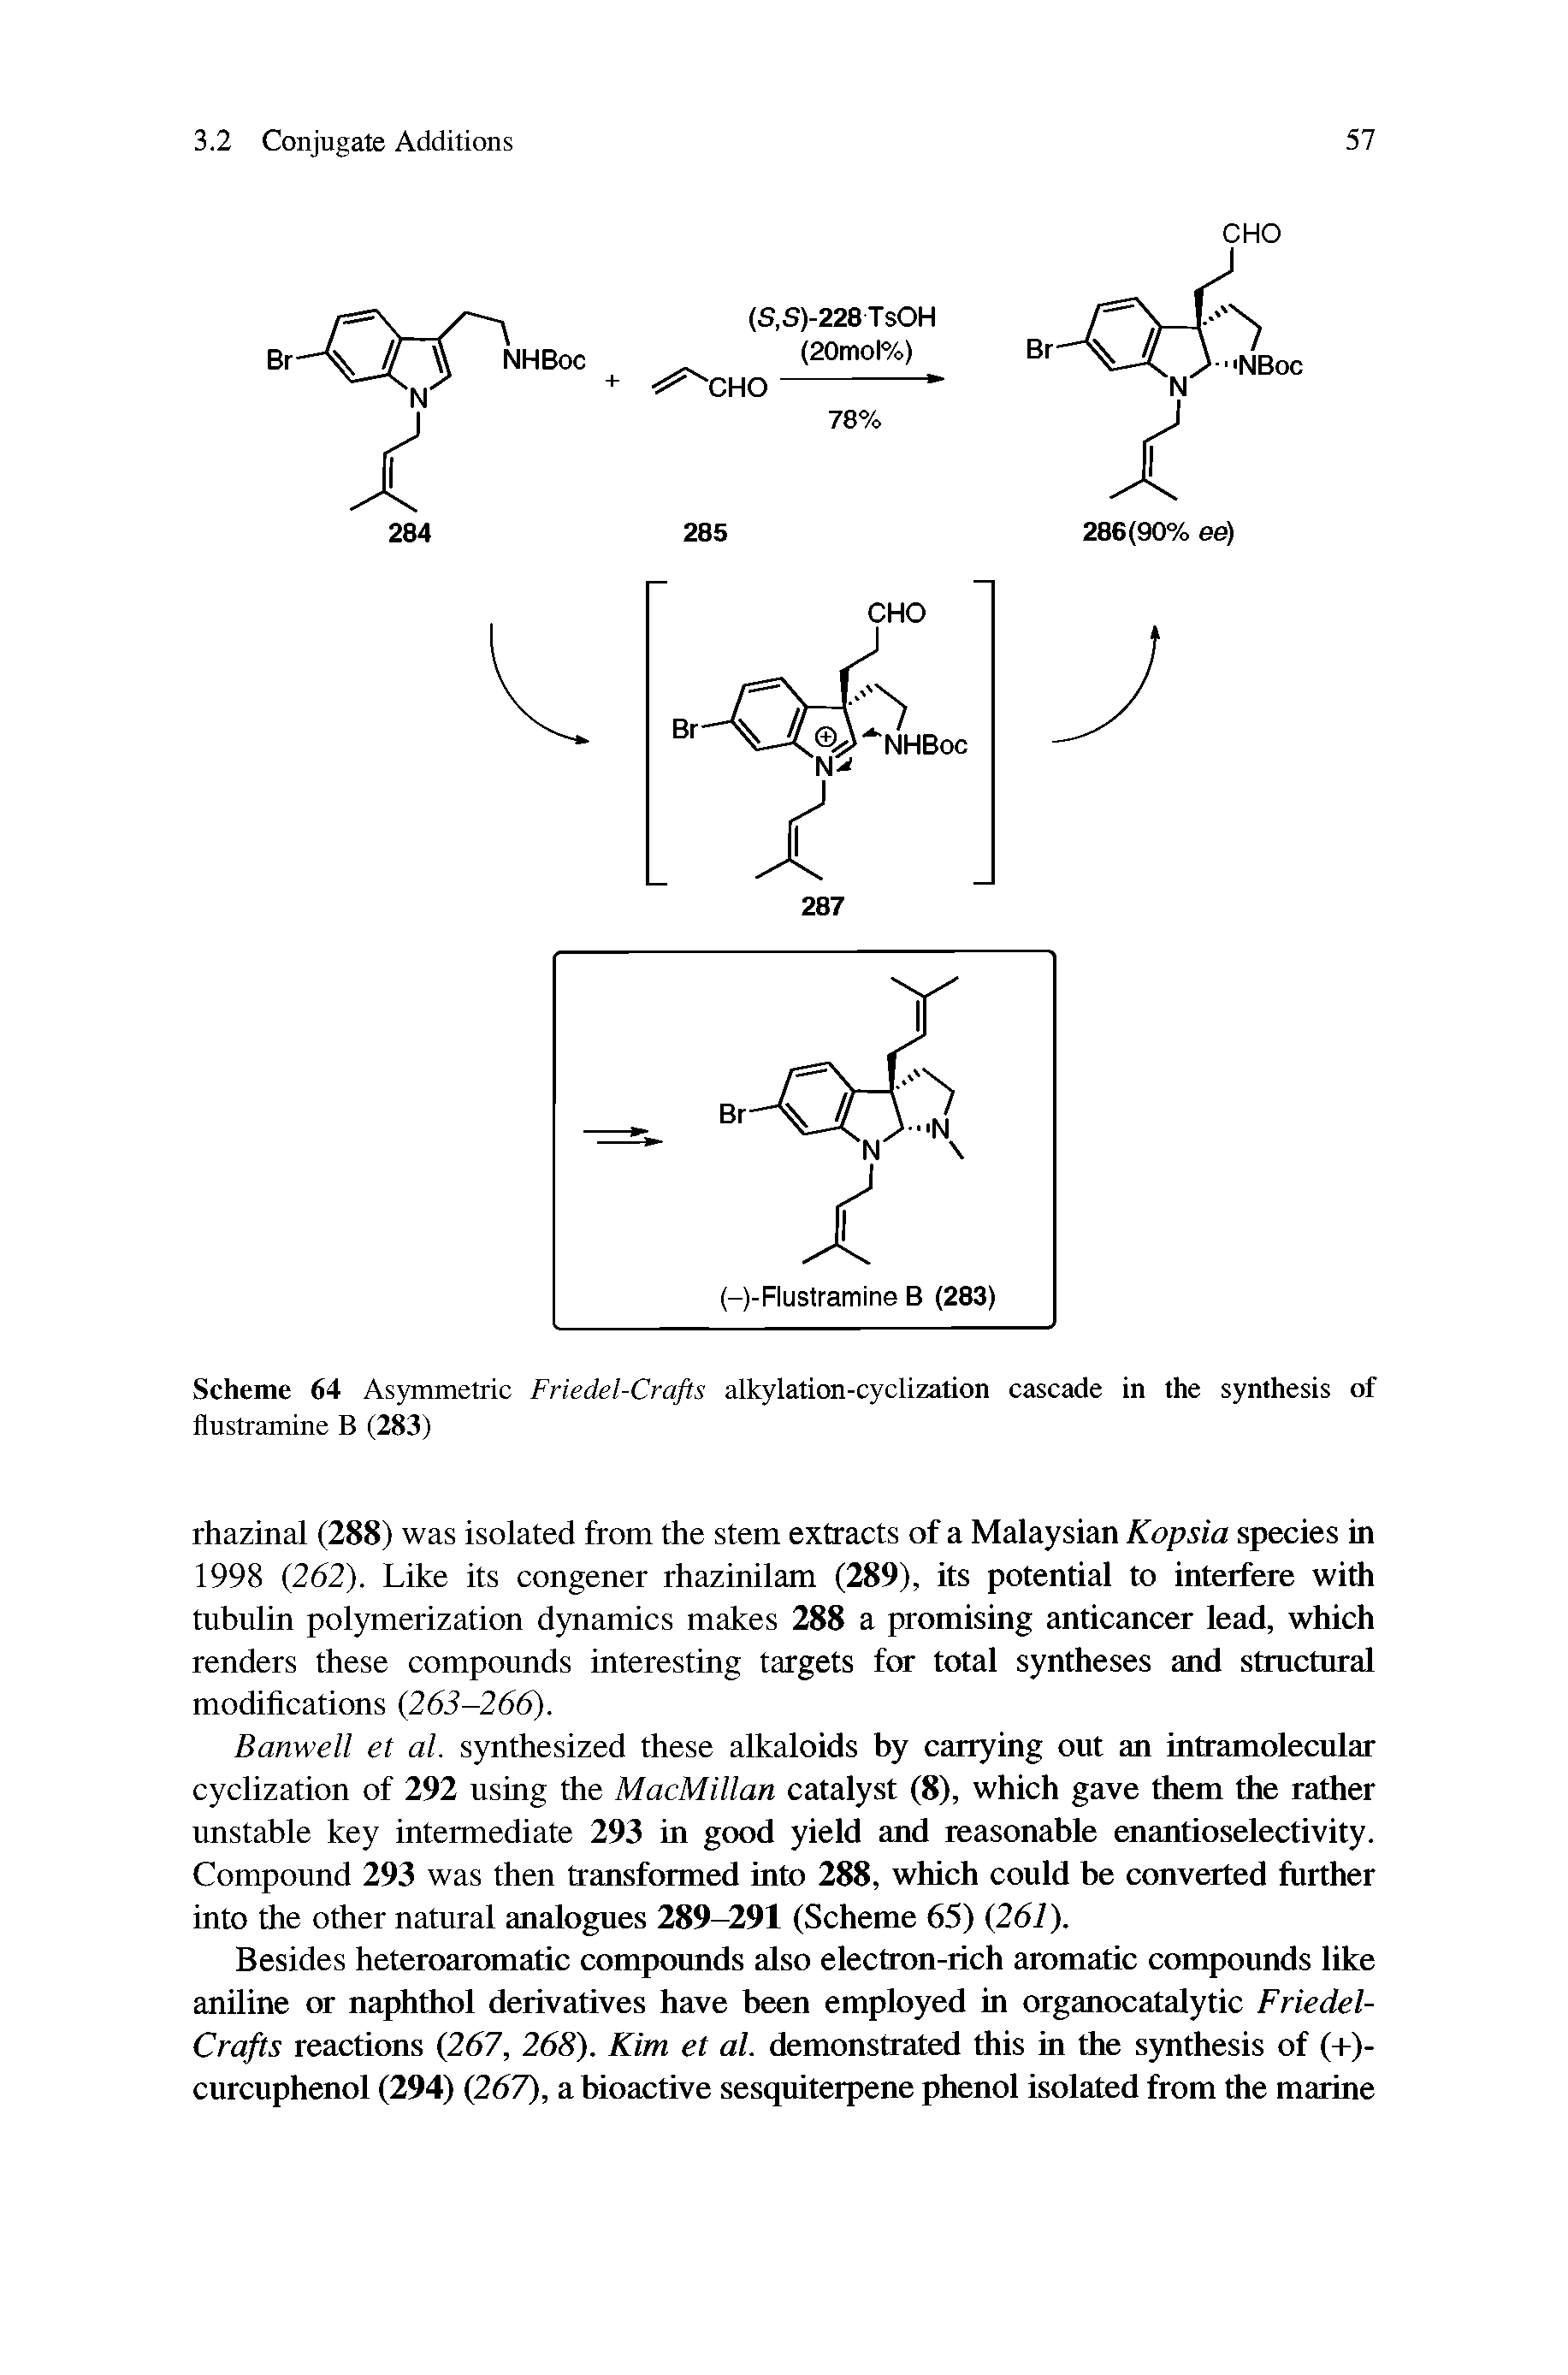 Scheme 64 Asymmetric Friedel-Crafts alkylation-cyclization cascade in the synthesis of flustramine B (283)...